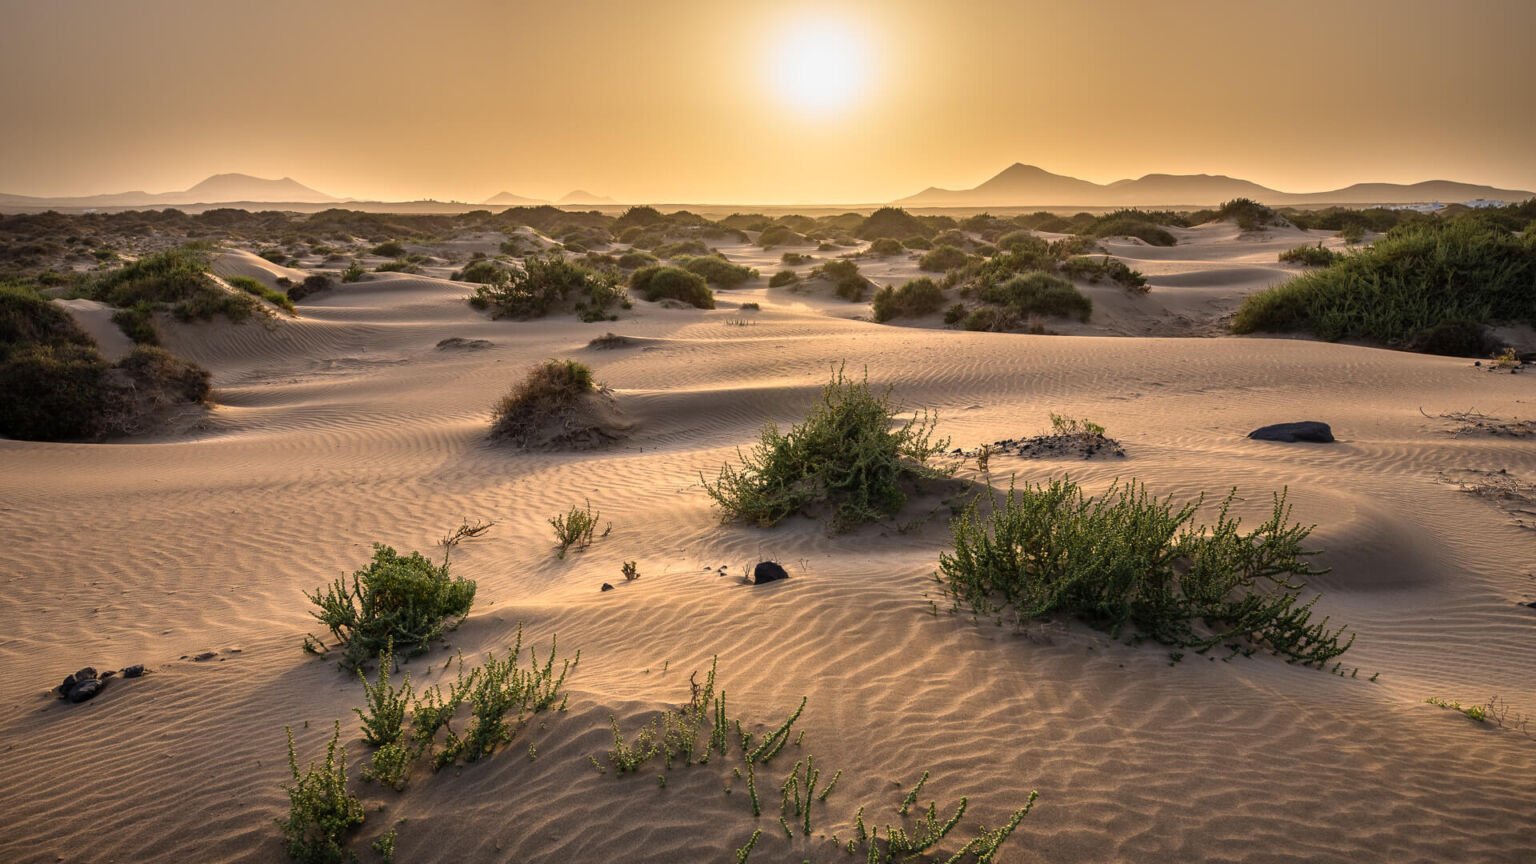 Epic desert landscape - Lanzarote | Dreamworld Pictures